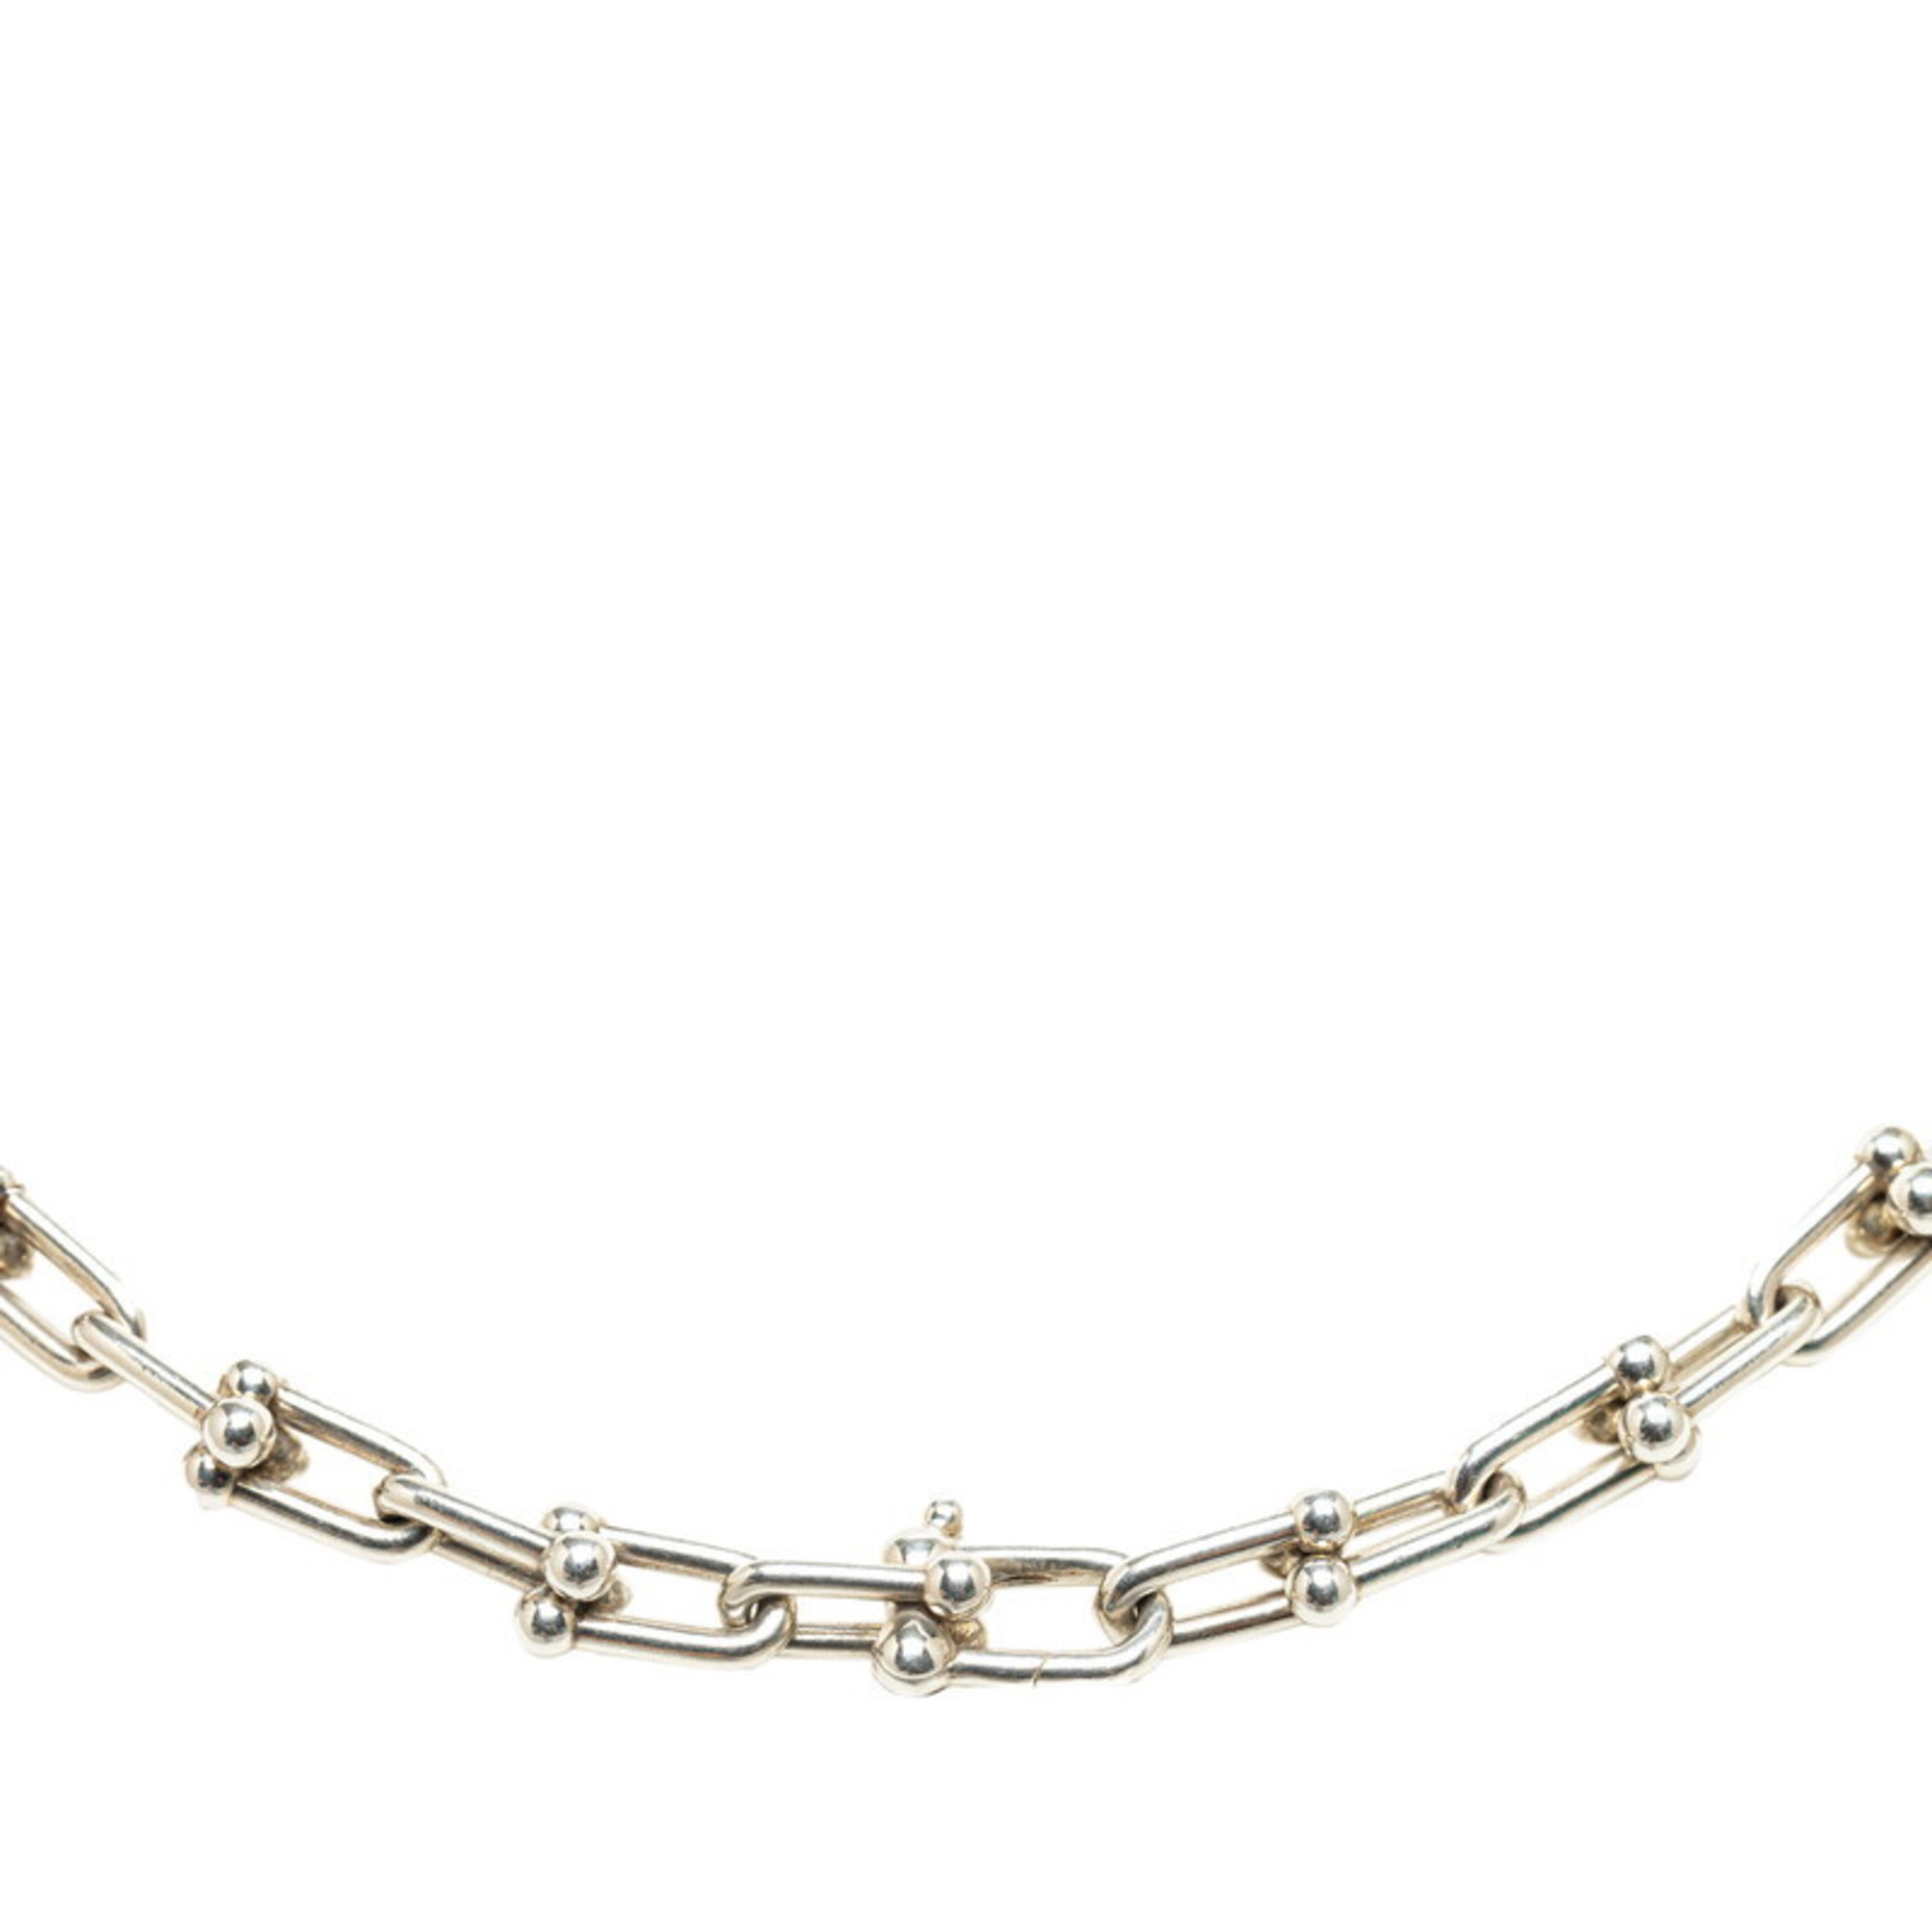 Tiffany HardWear Necklace Silver SV925 Women's TIFFANY&Co.